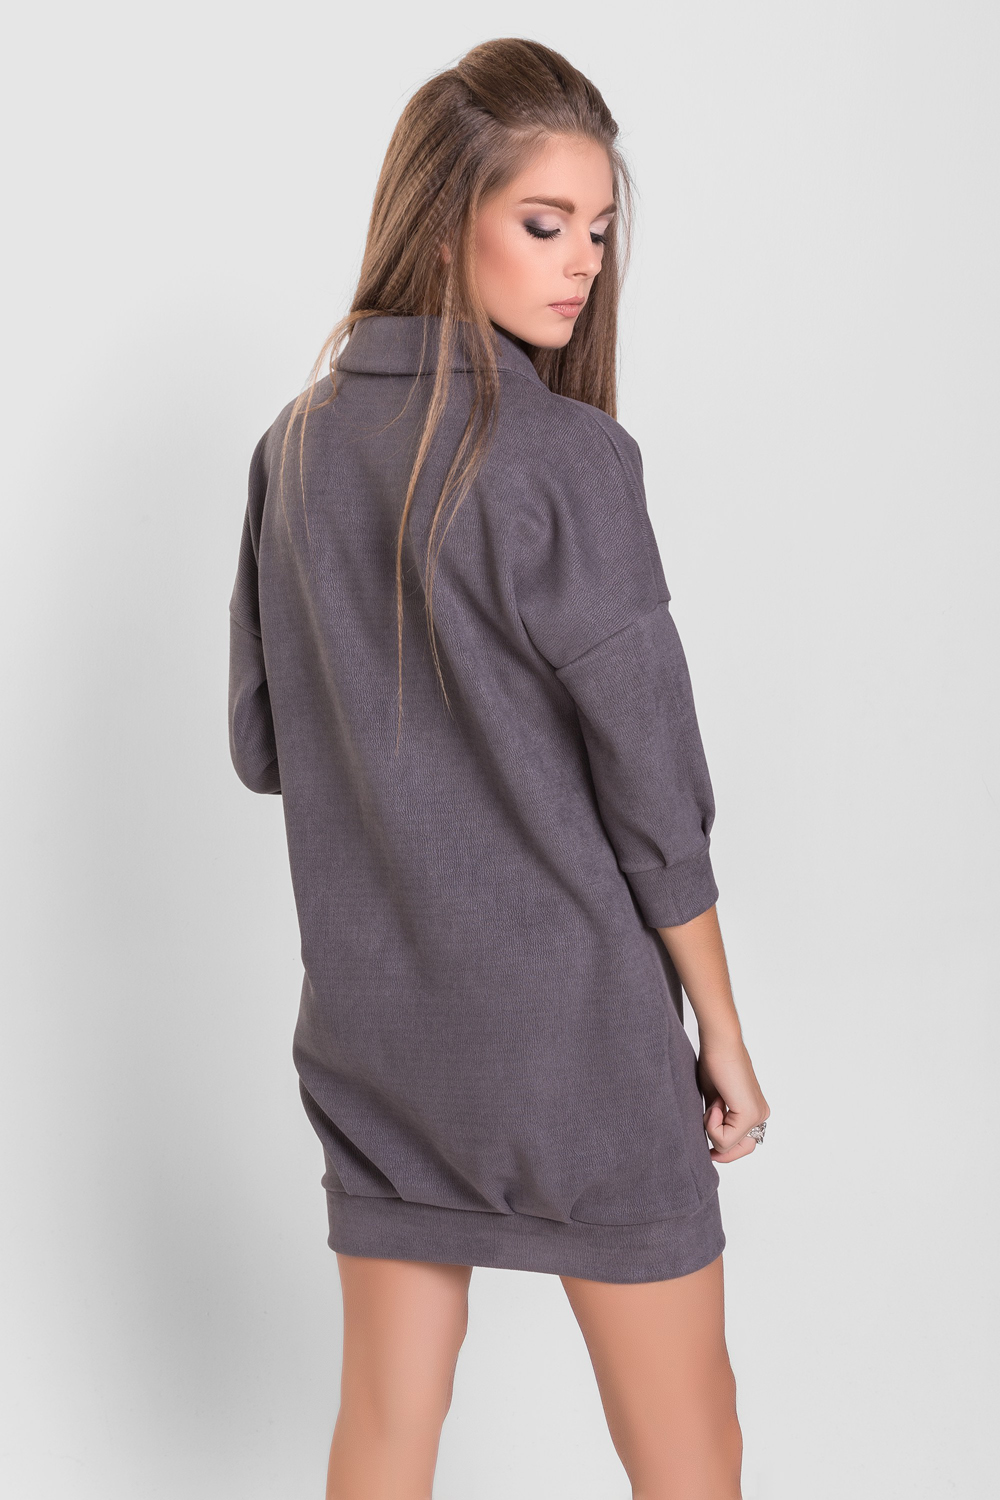 Sweatshirt dress in grey